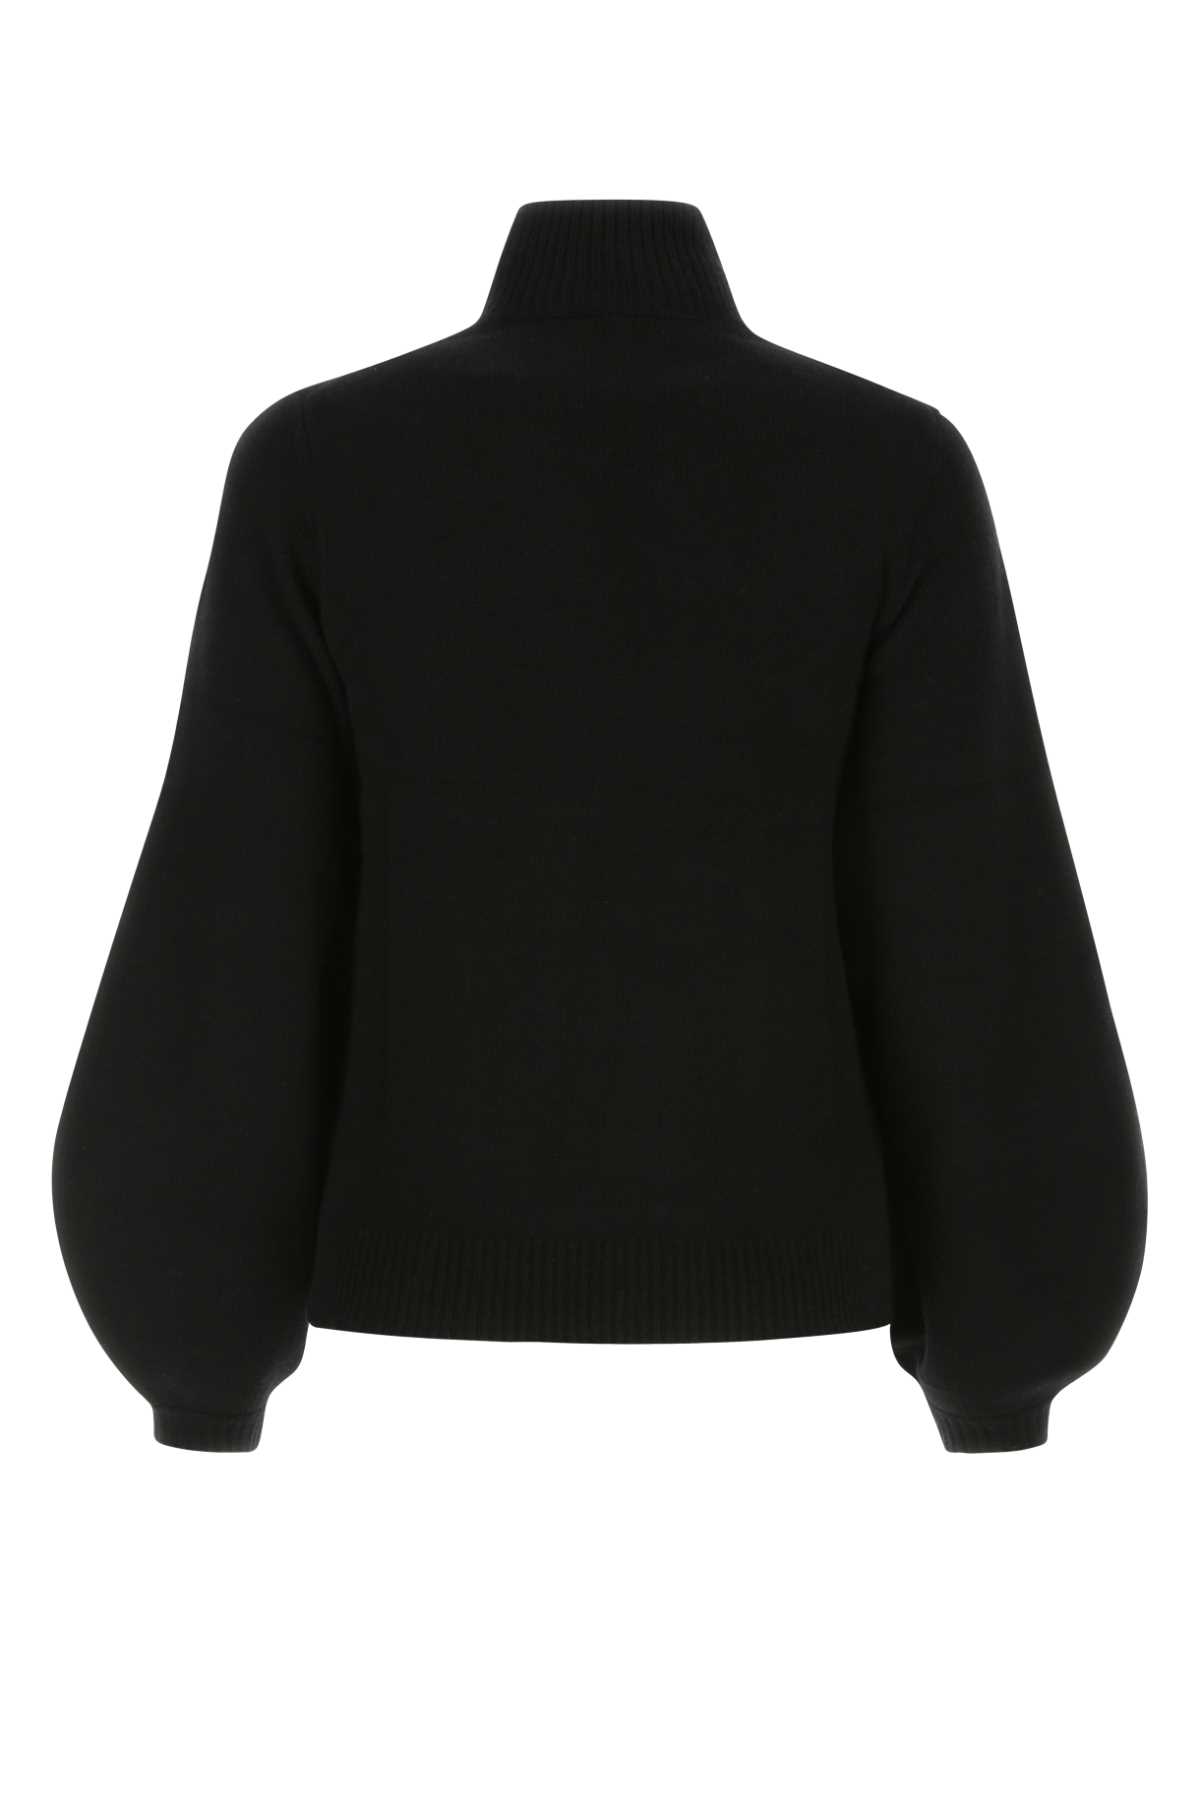 Chloé Black Cashmere Sweater In 001